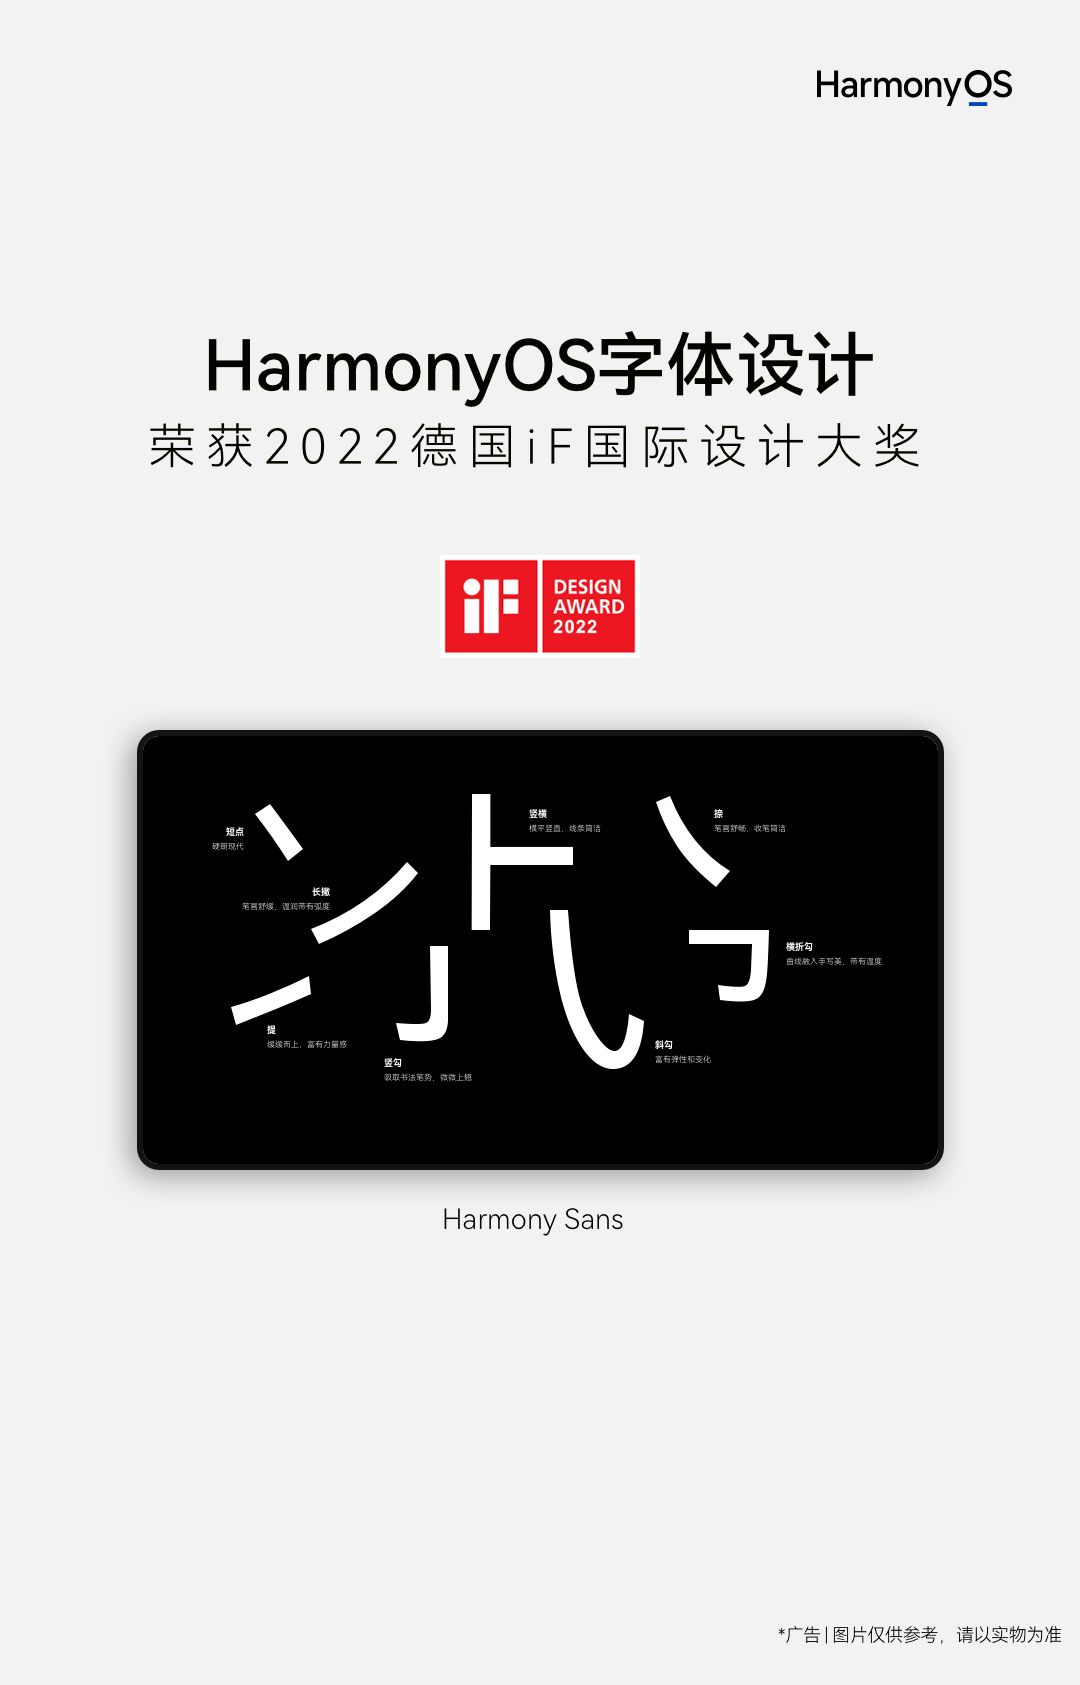 HarmonyOS字体设计 荣获2022德国F国际设计大奖